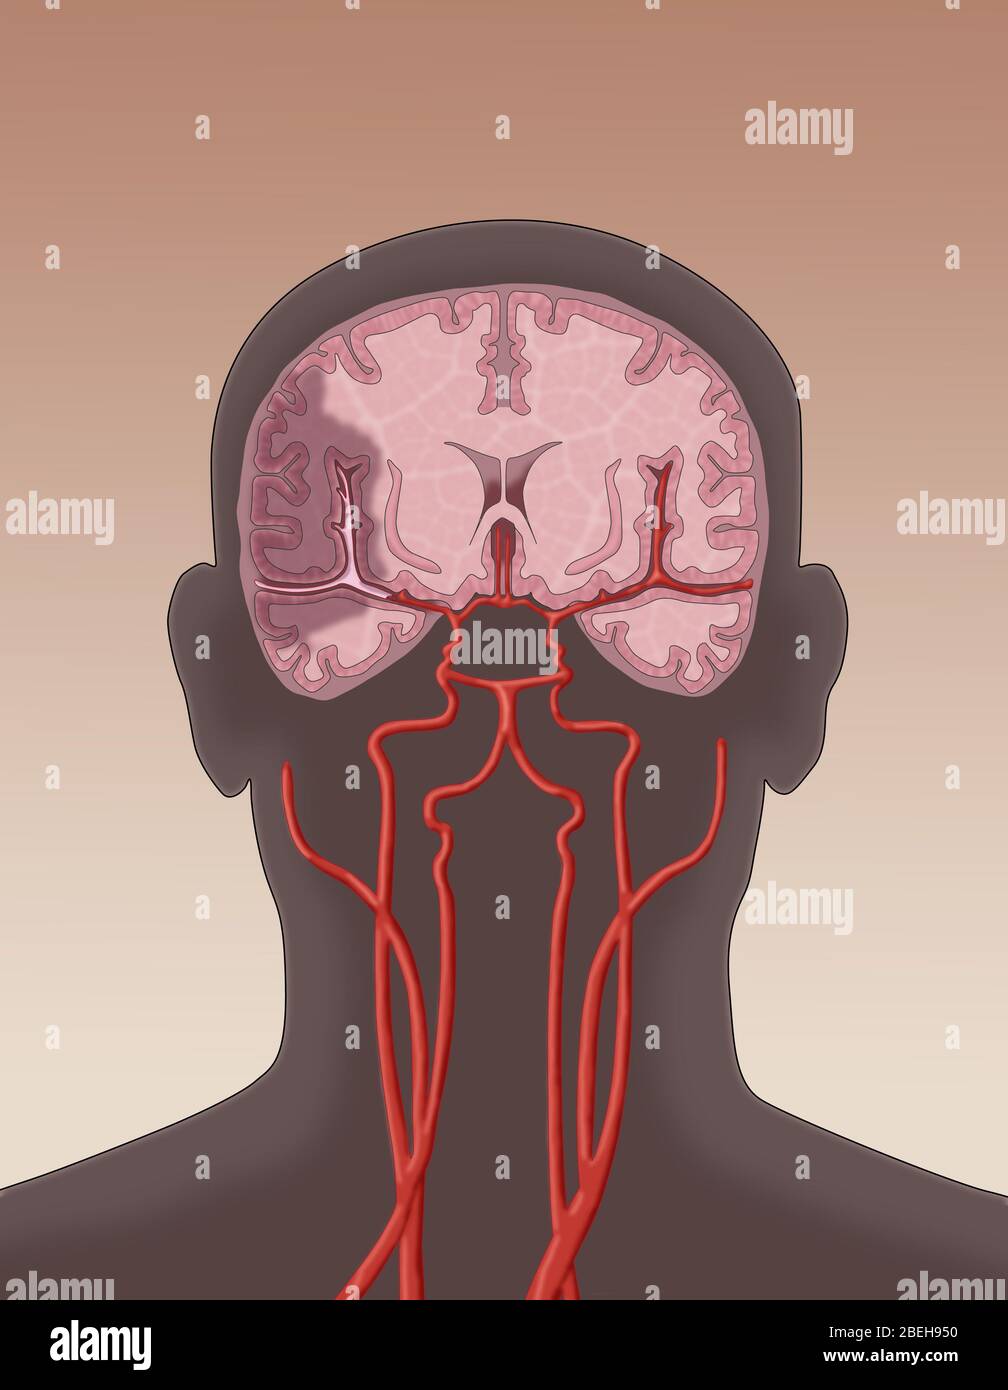 Ictus ischemico. In un ictus ischemico un coagulo blocca il flusso sanguigno verso un'area del cervello. Foto Stock